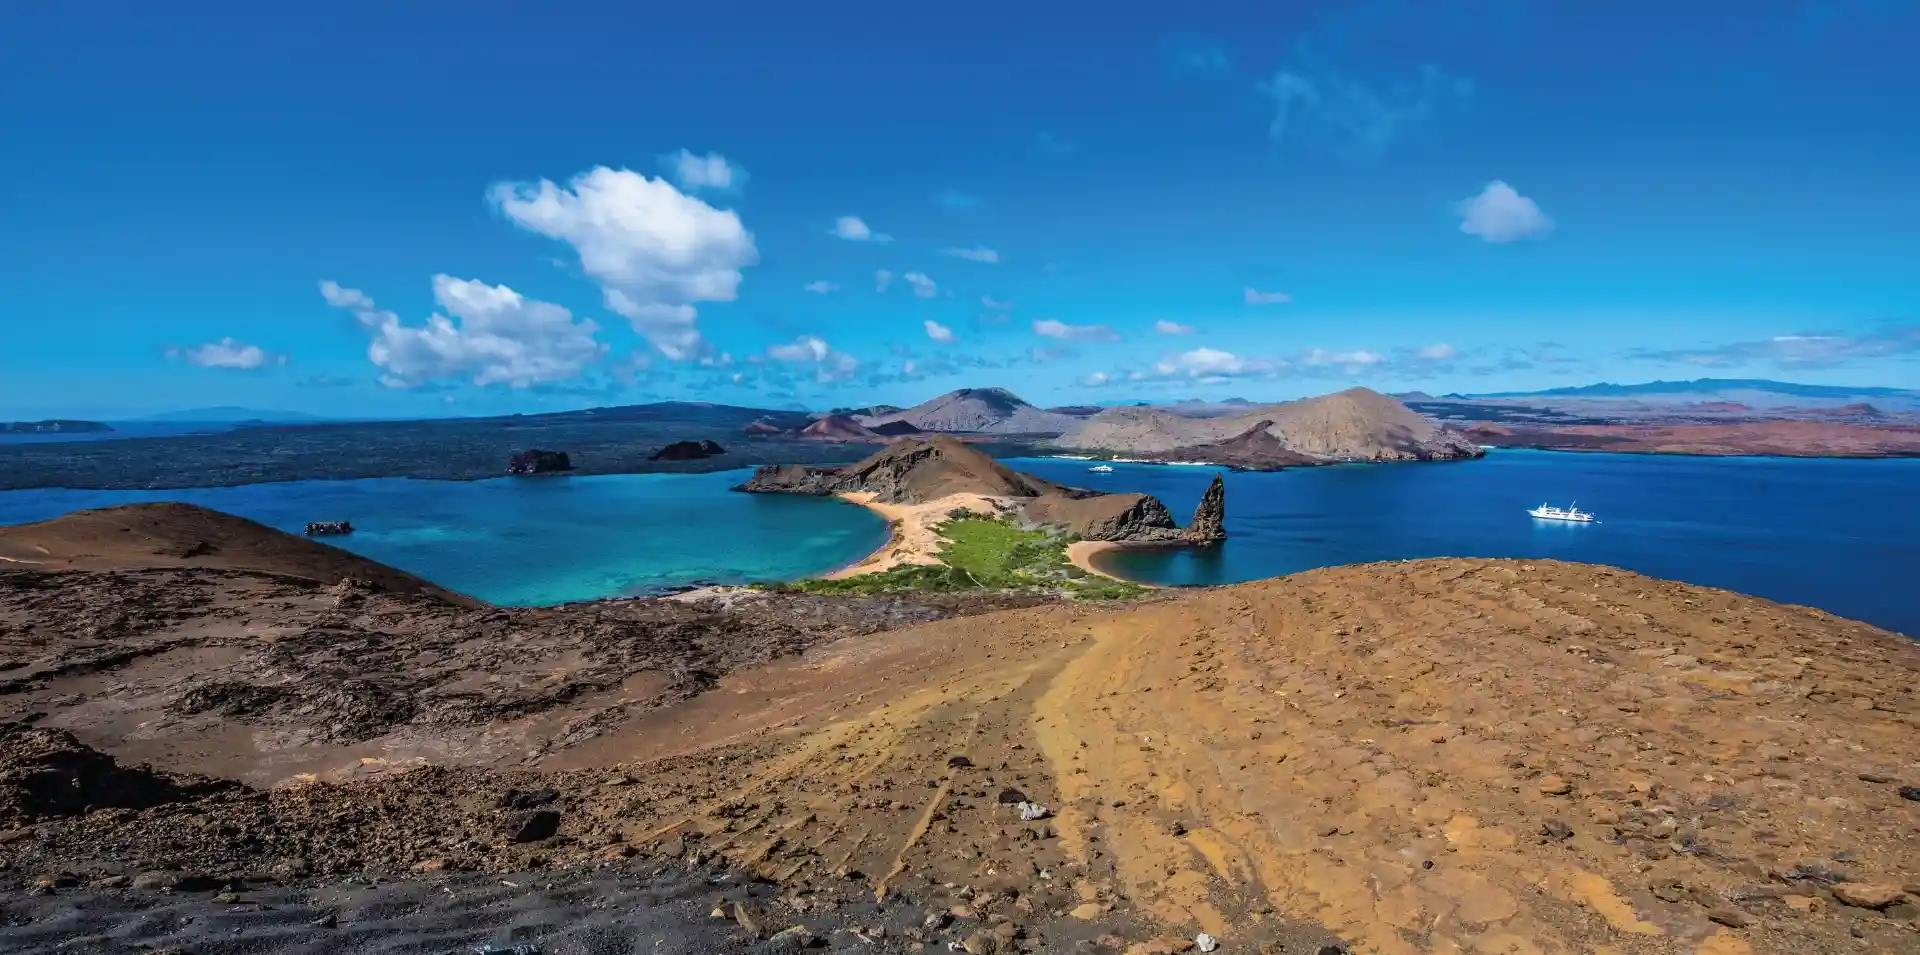 Galapagos Islands: Bartolome